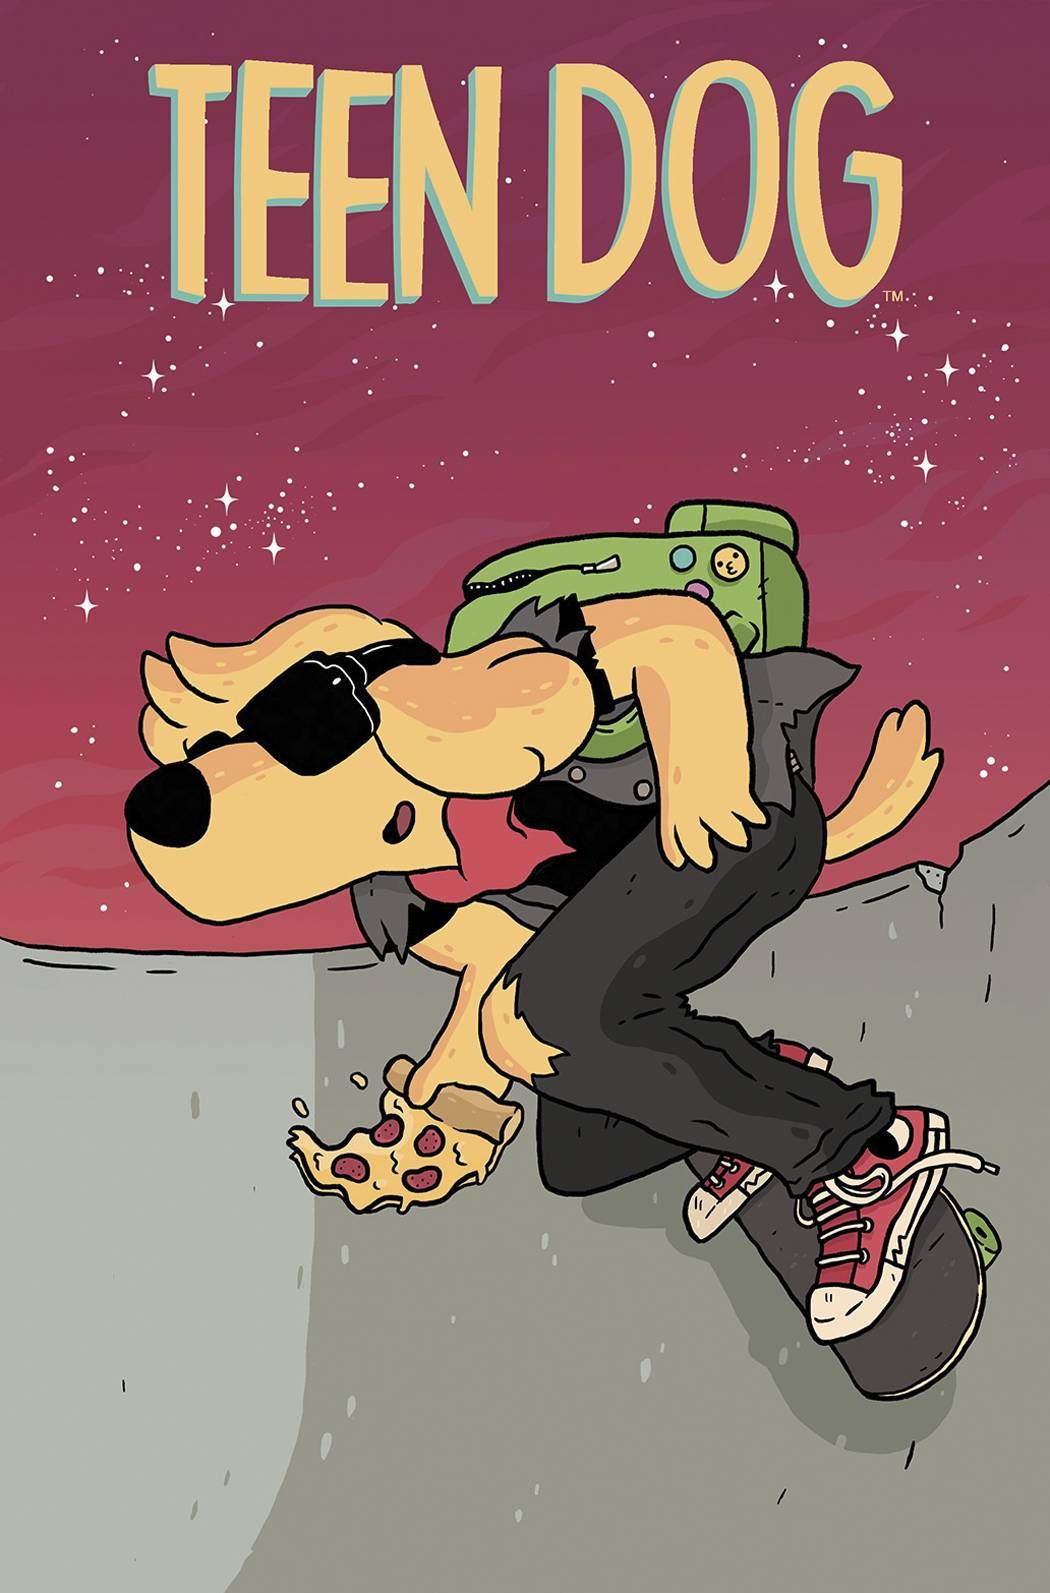 Teen Dog #1 Comic